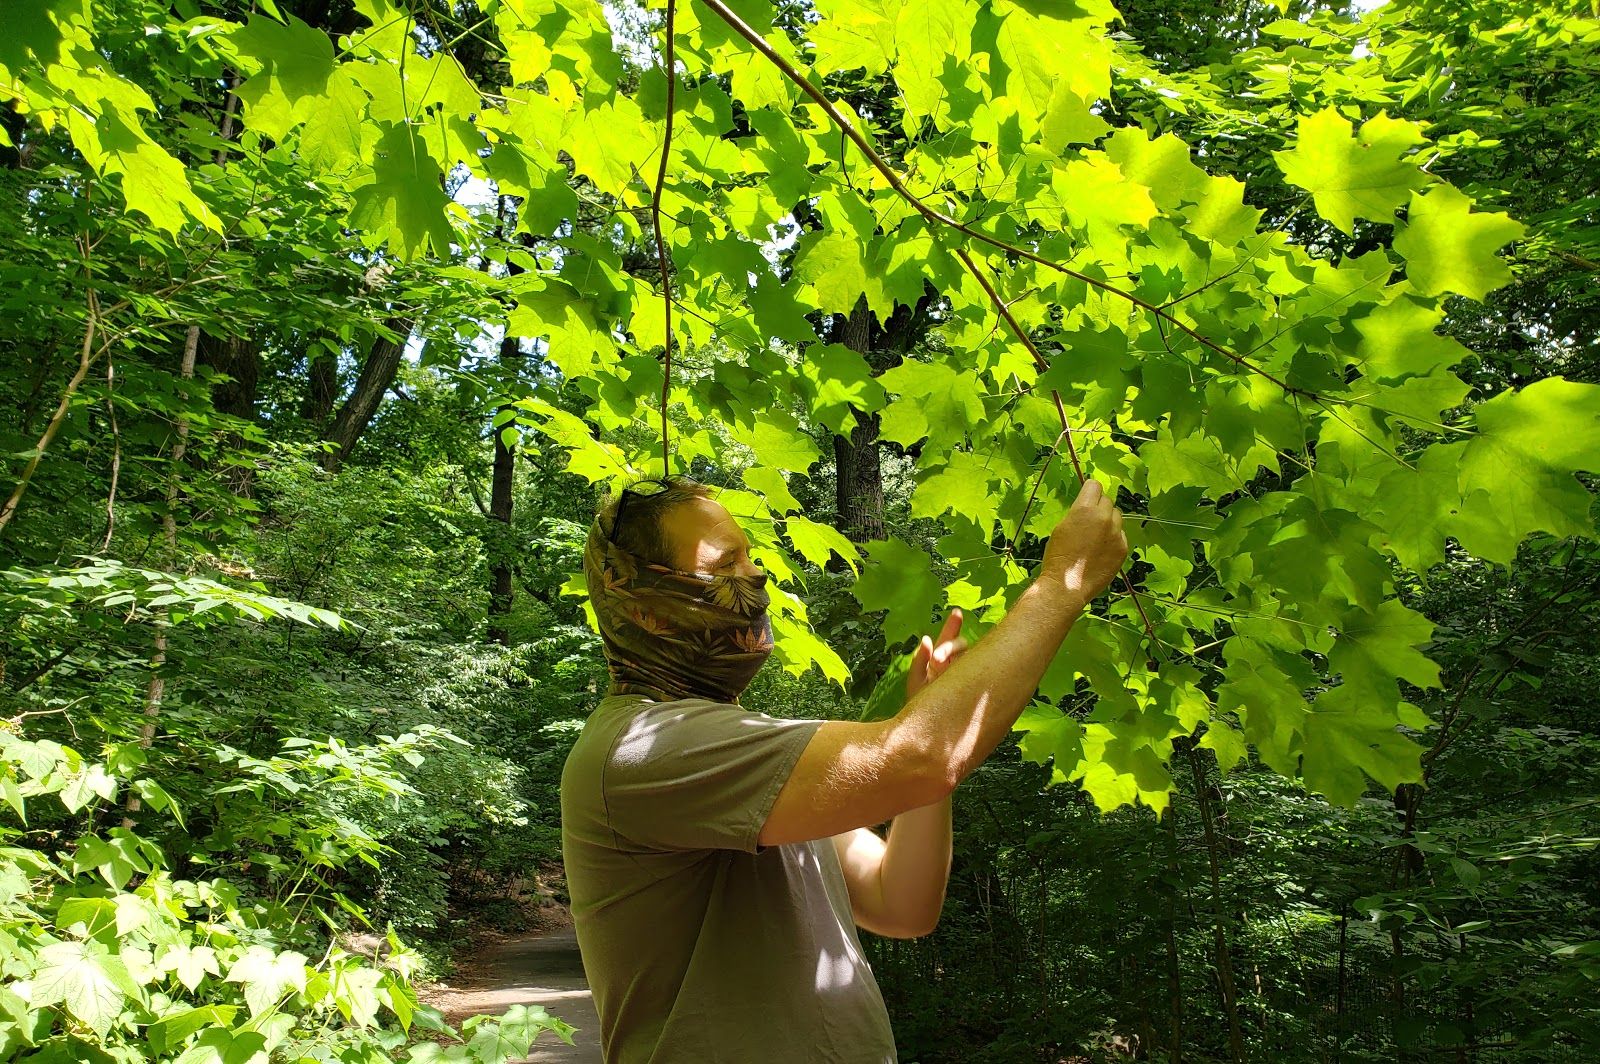 John Jordan of Prospect Park Alliance inspects a native sugar maple. Image by Clarisa Diaz. United States, 2020.
